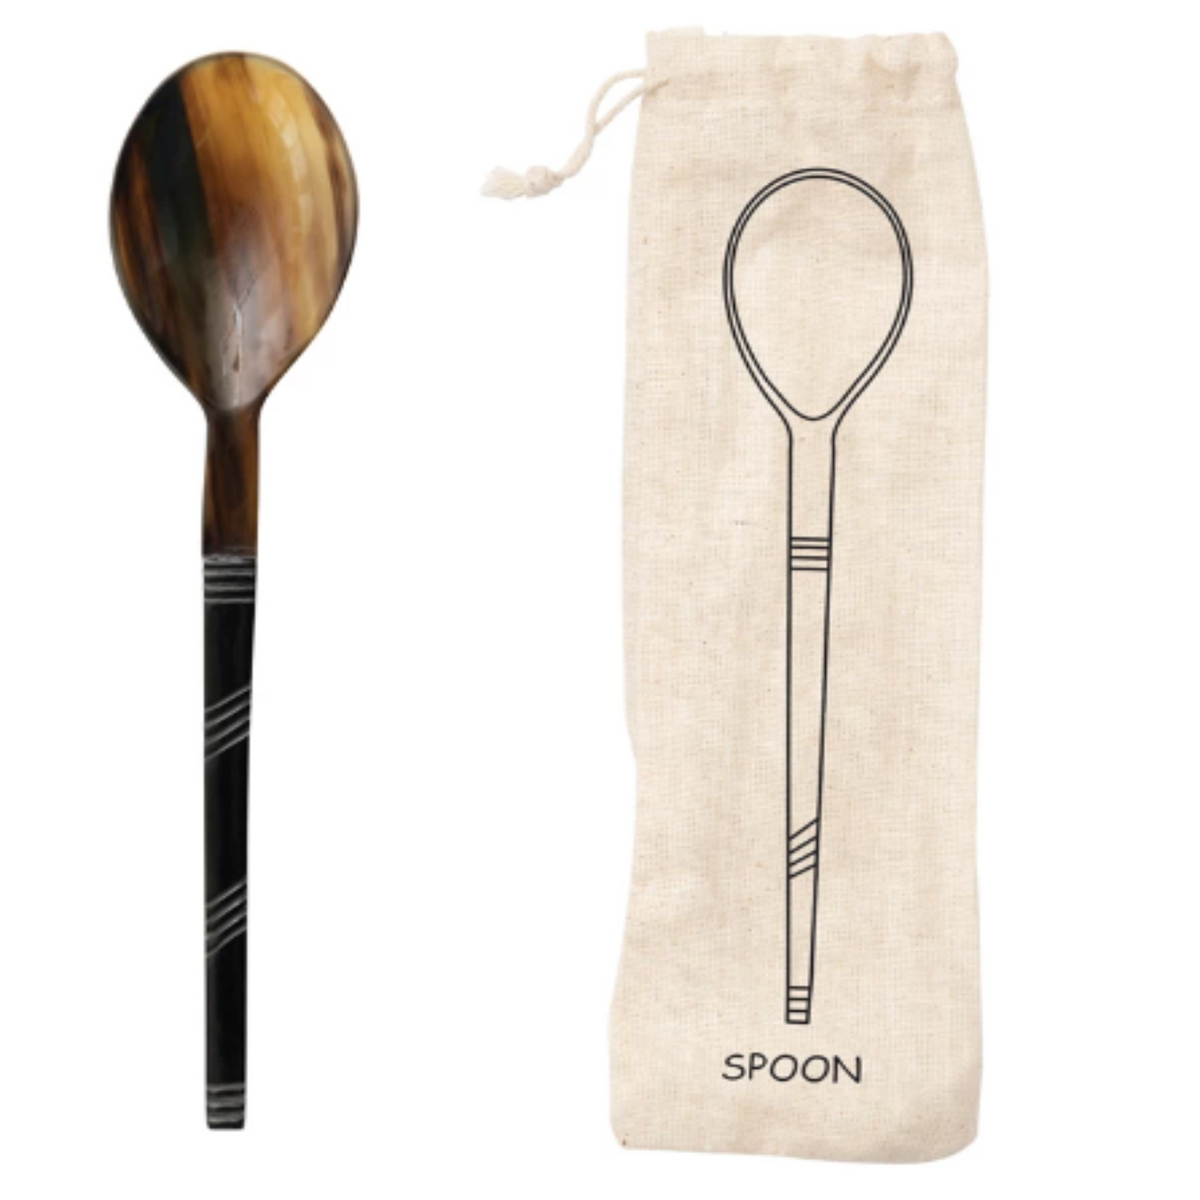 Horn Serving Spoon In Printed Drawstring Bag